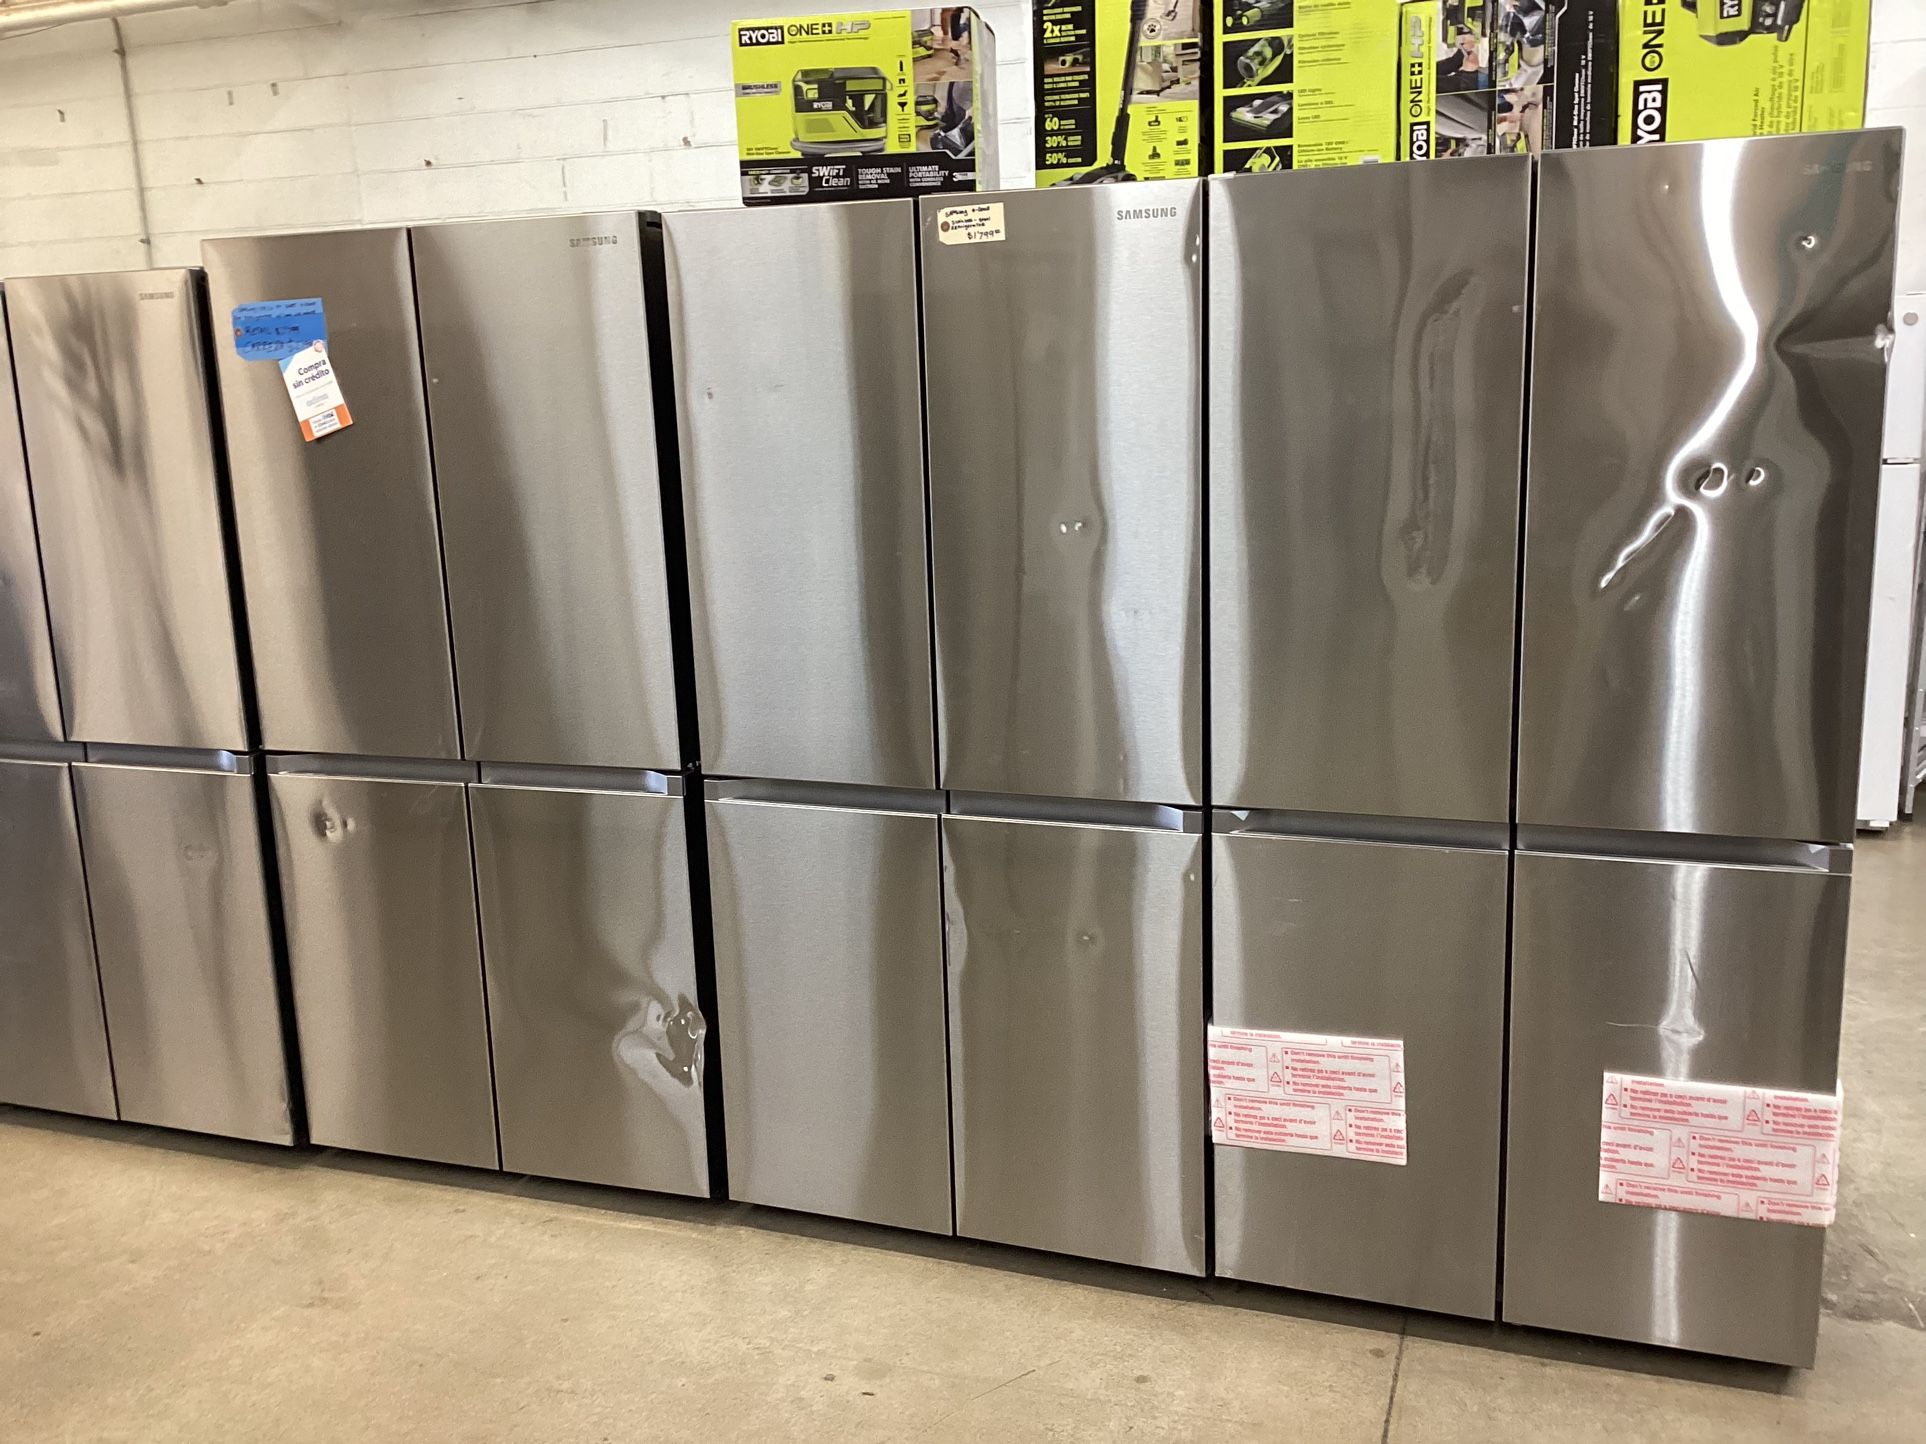 Samsung Refrigerator New Scratch And Dent Refrigerators Starting At $1000